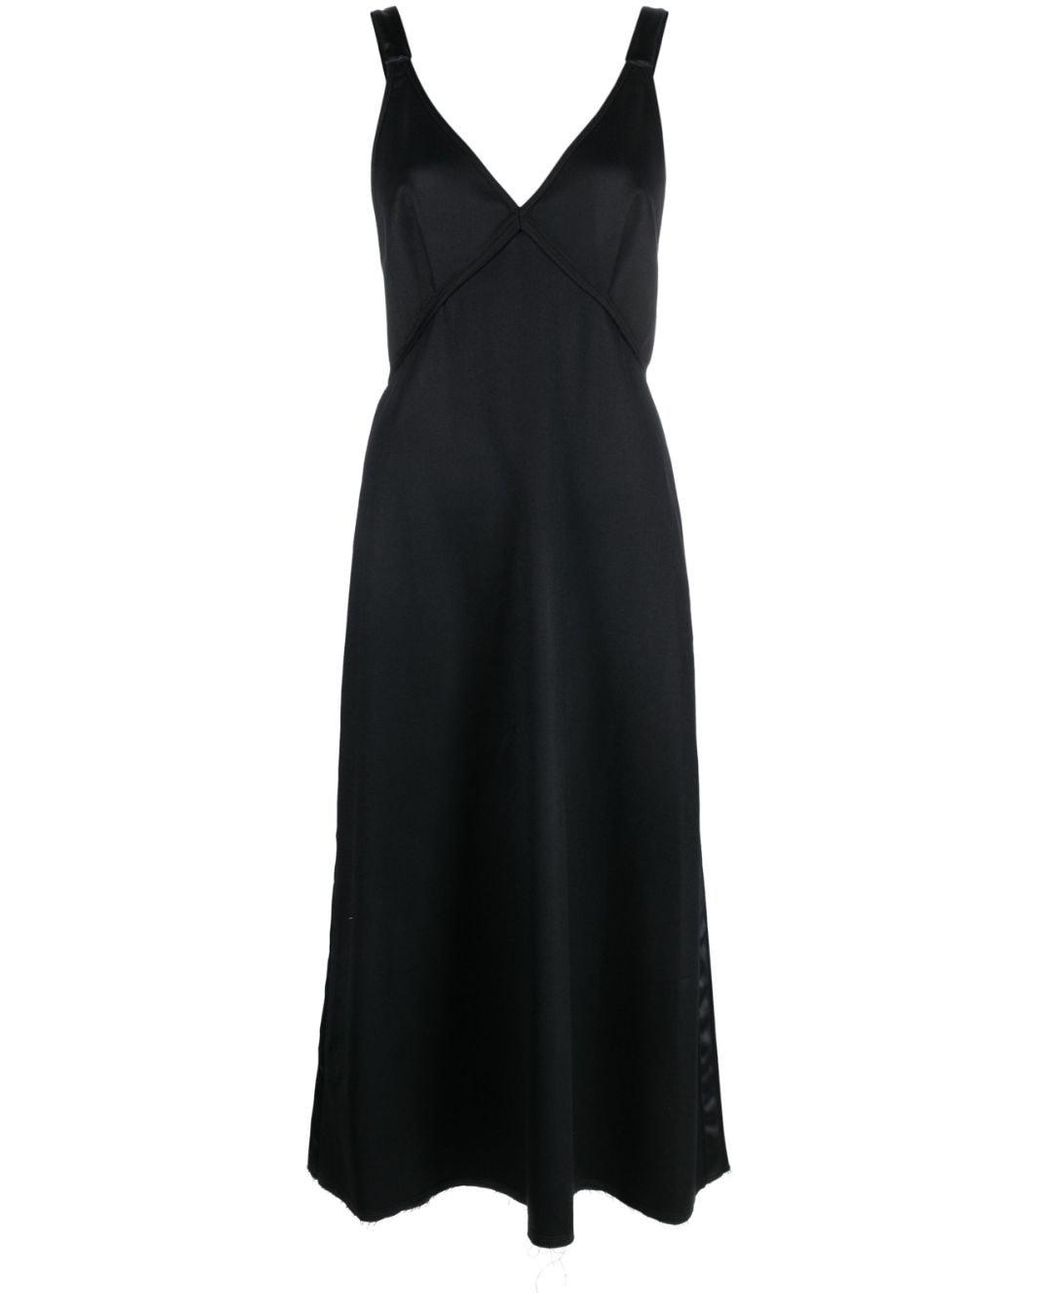 Slip Dress in Black Stretch Cady